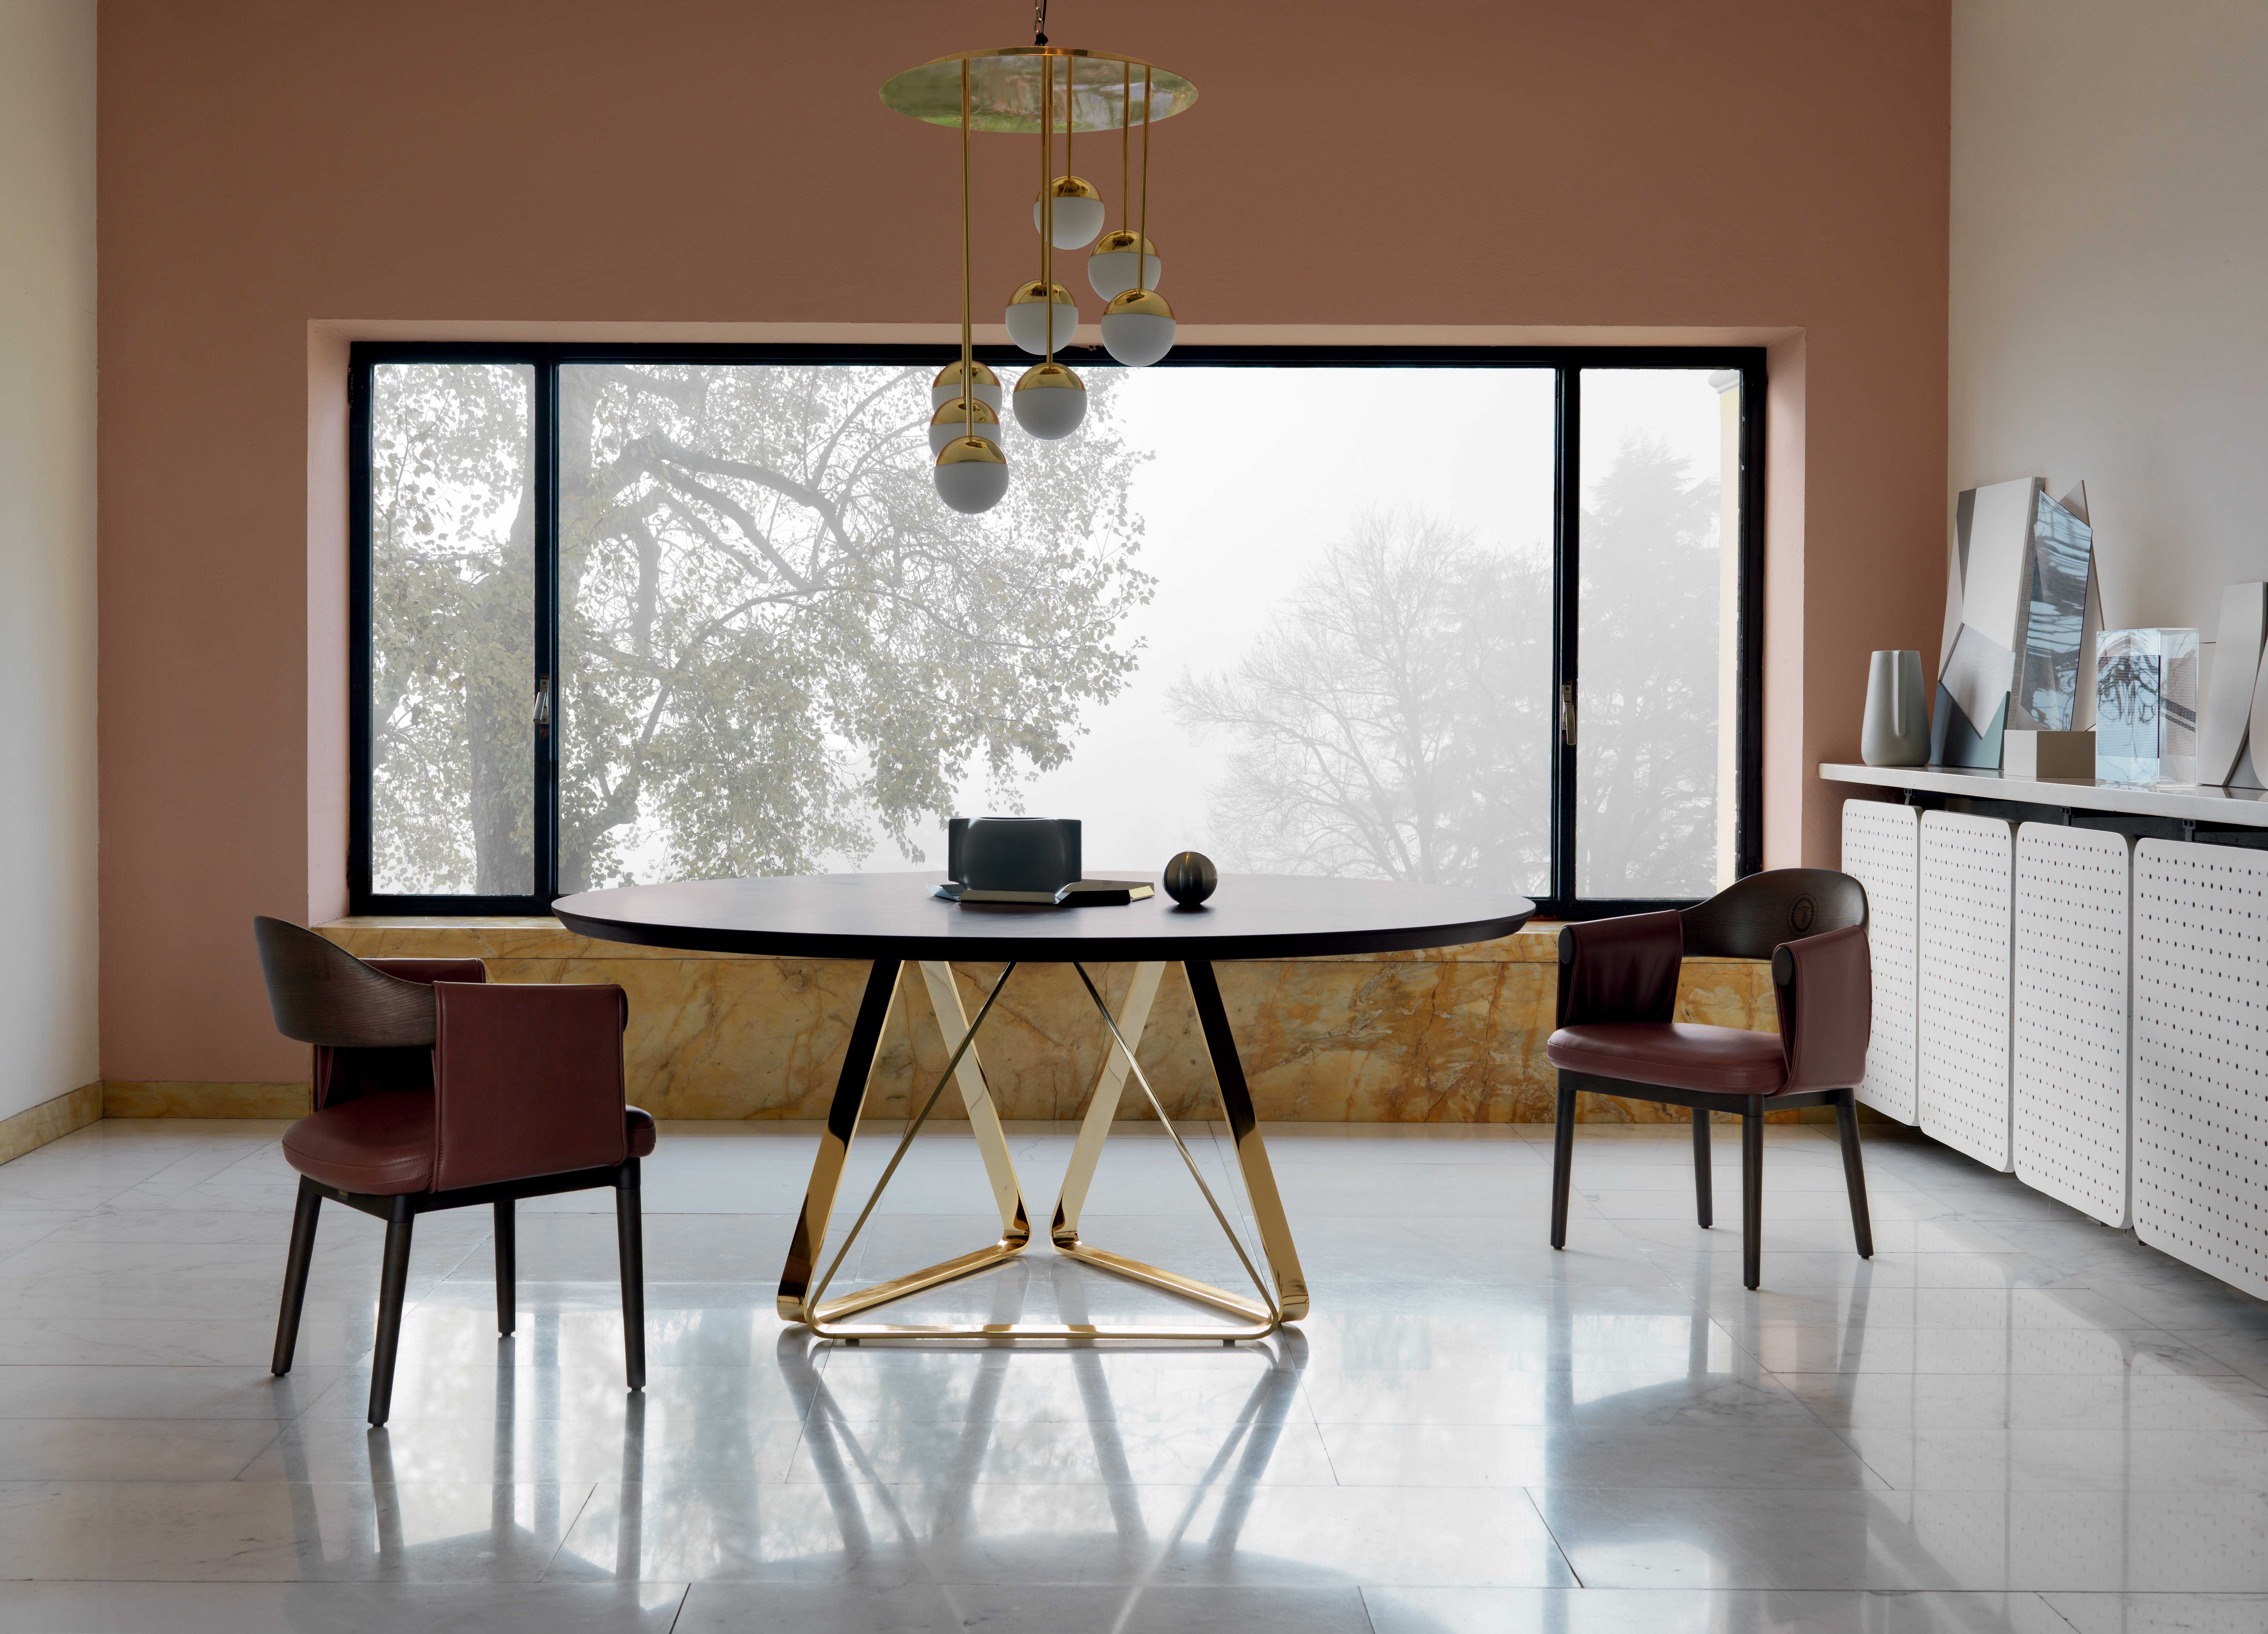 Trussardi Tosco round table, Larzia chairs, Cherries suspension